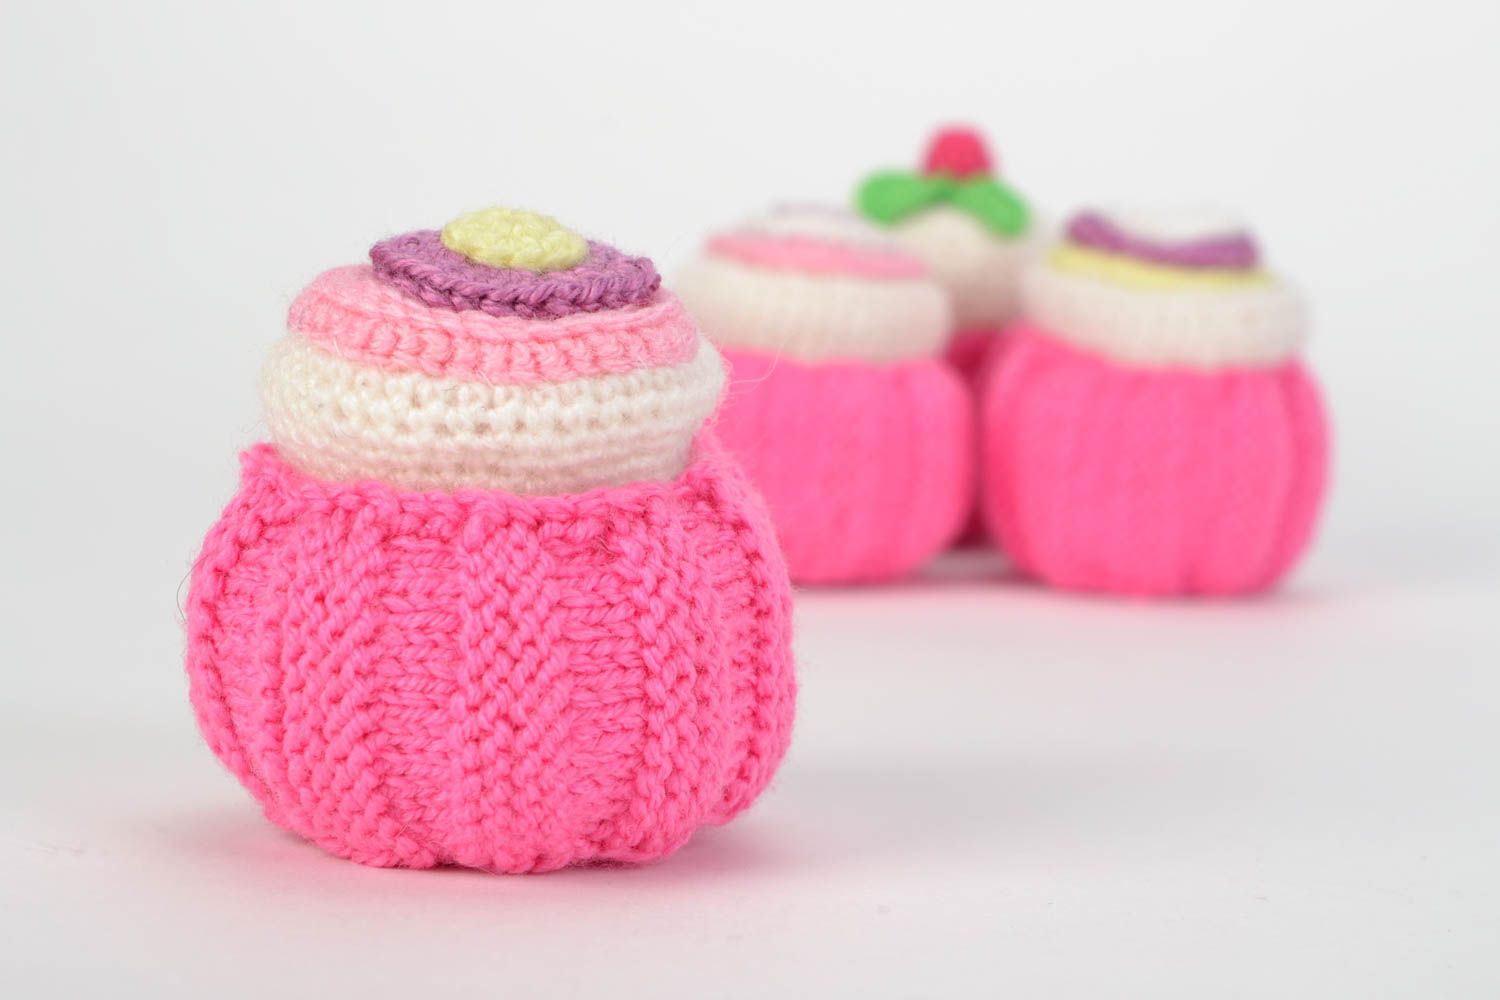 Miniature handmade pink crochet soft cake for home decor photo 1